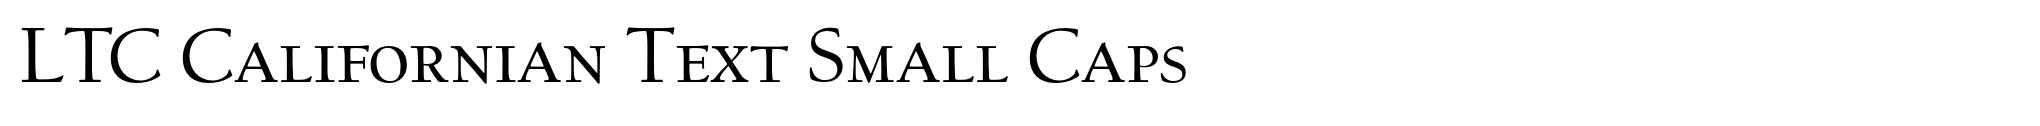 LTC Californian Text Small Caps image